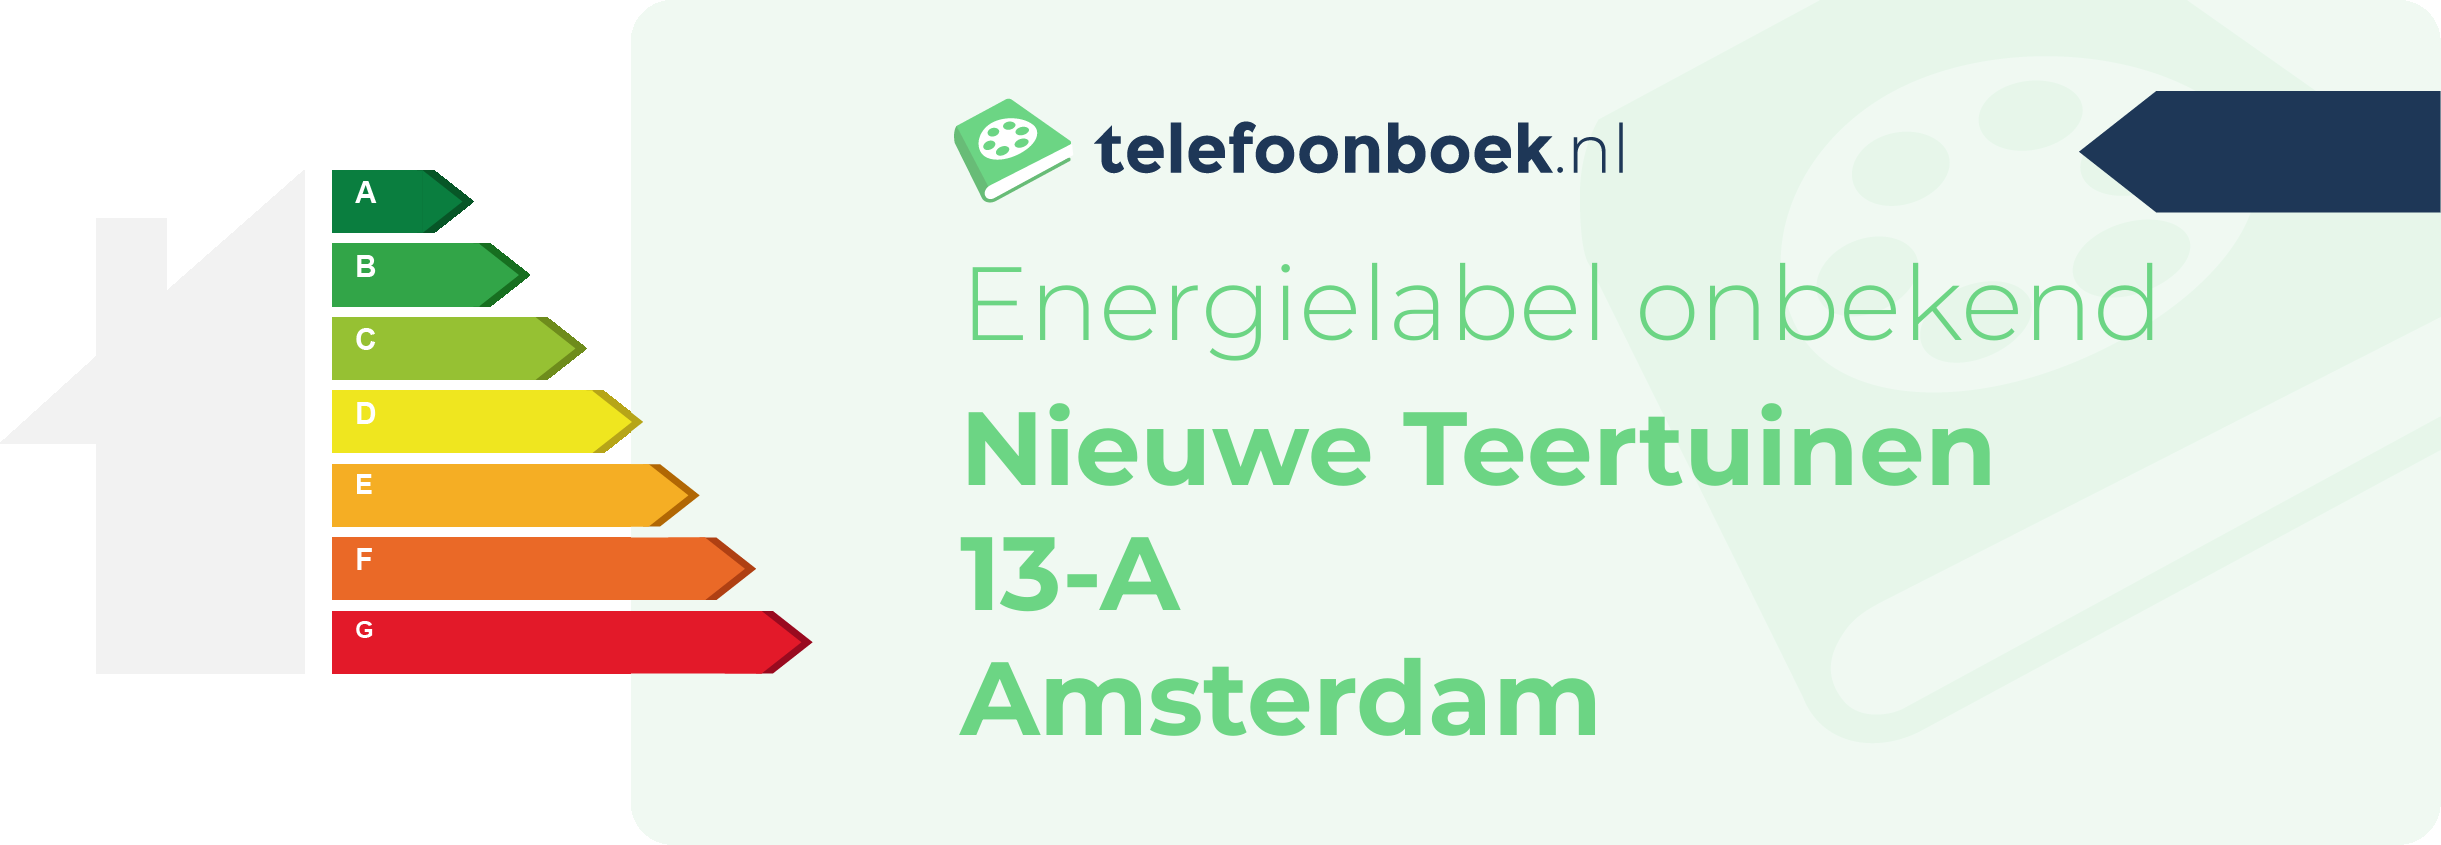 Energielabel Nieuwe Teertuinen 13-A Amsterdam